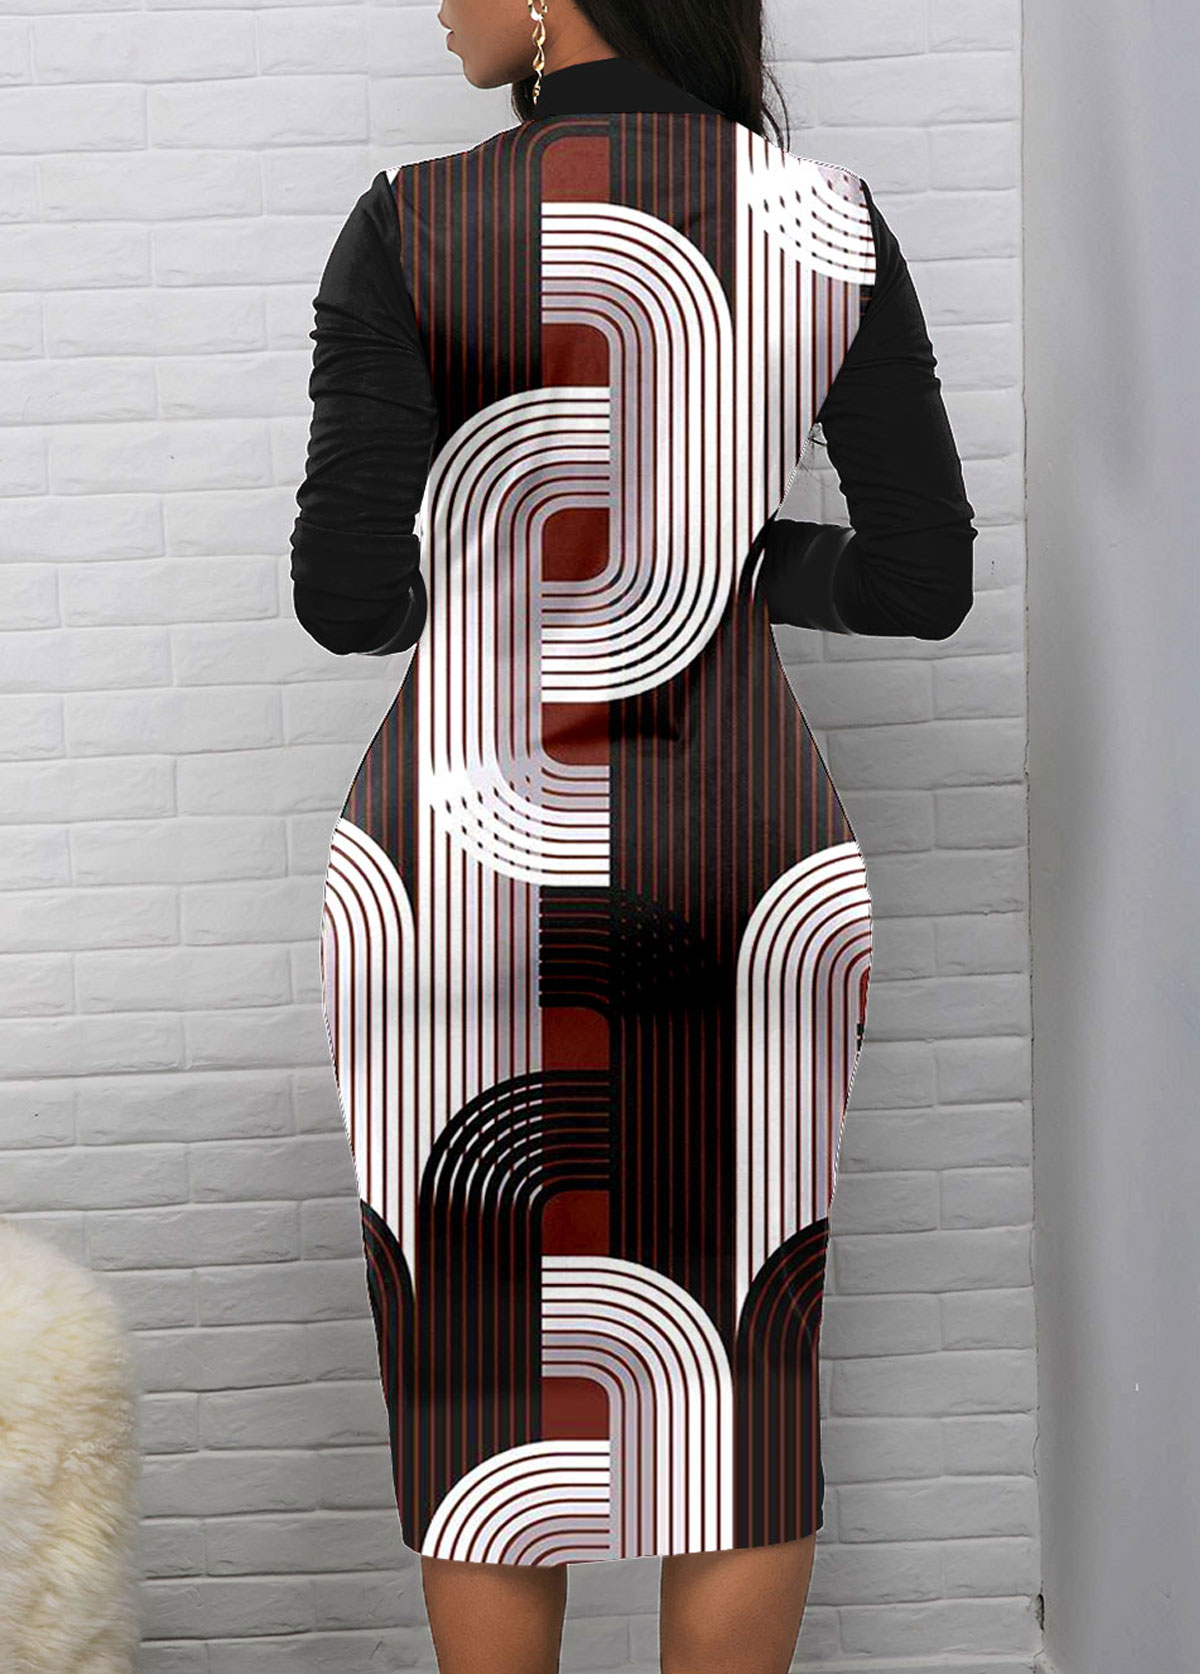 Geometric Print Zipper Black Long Sleeve Bodycon Dress